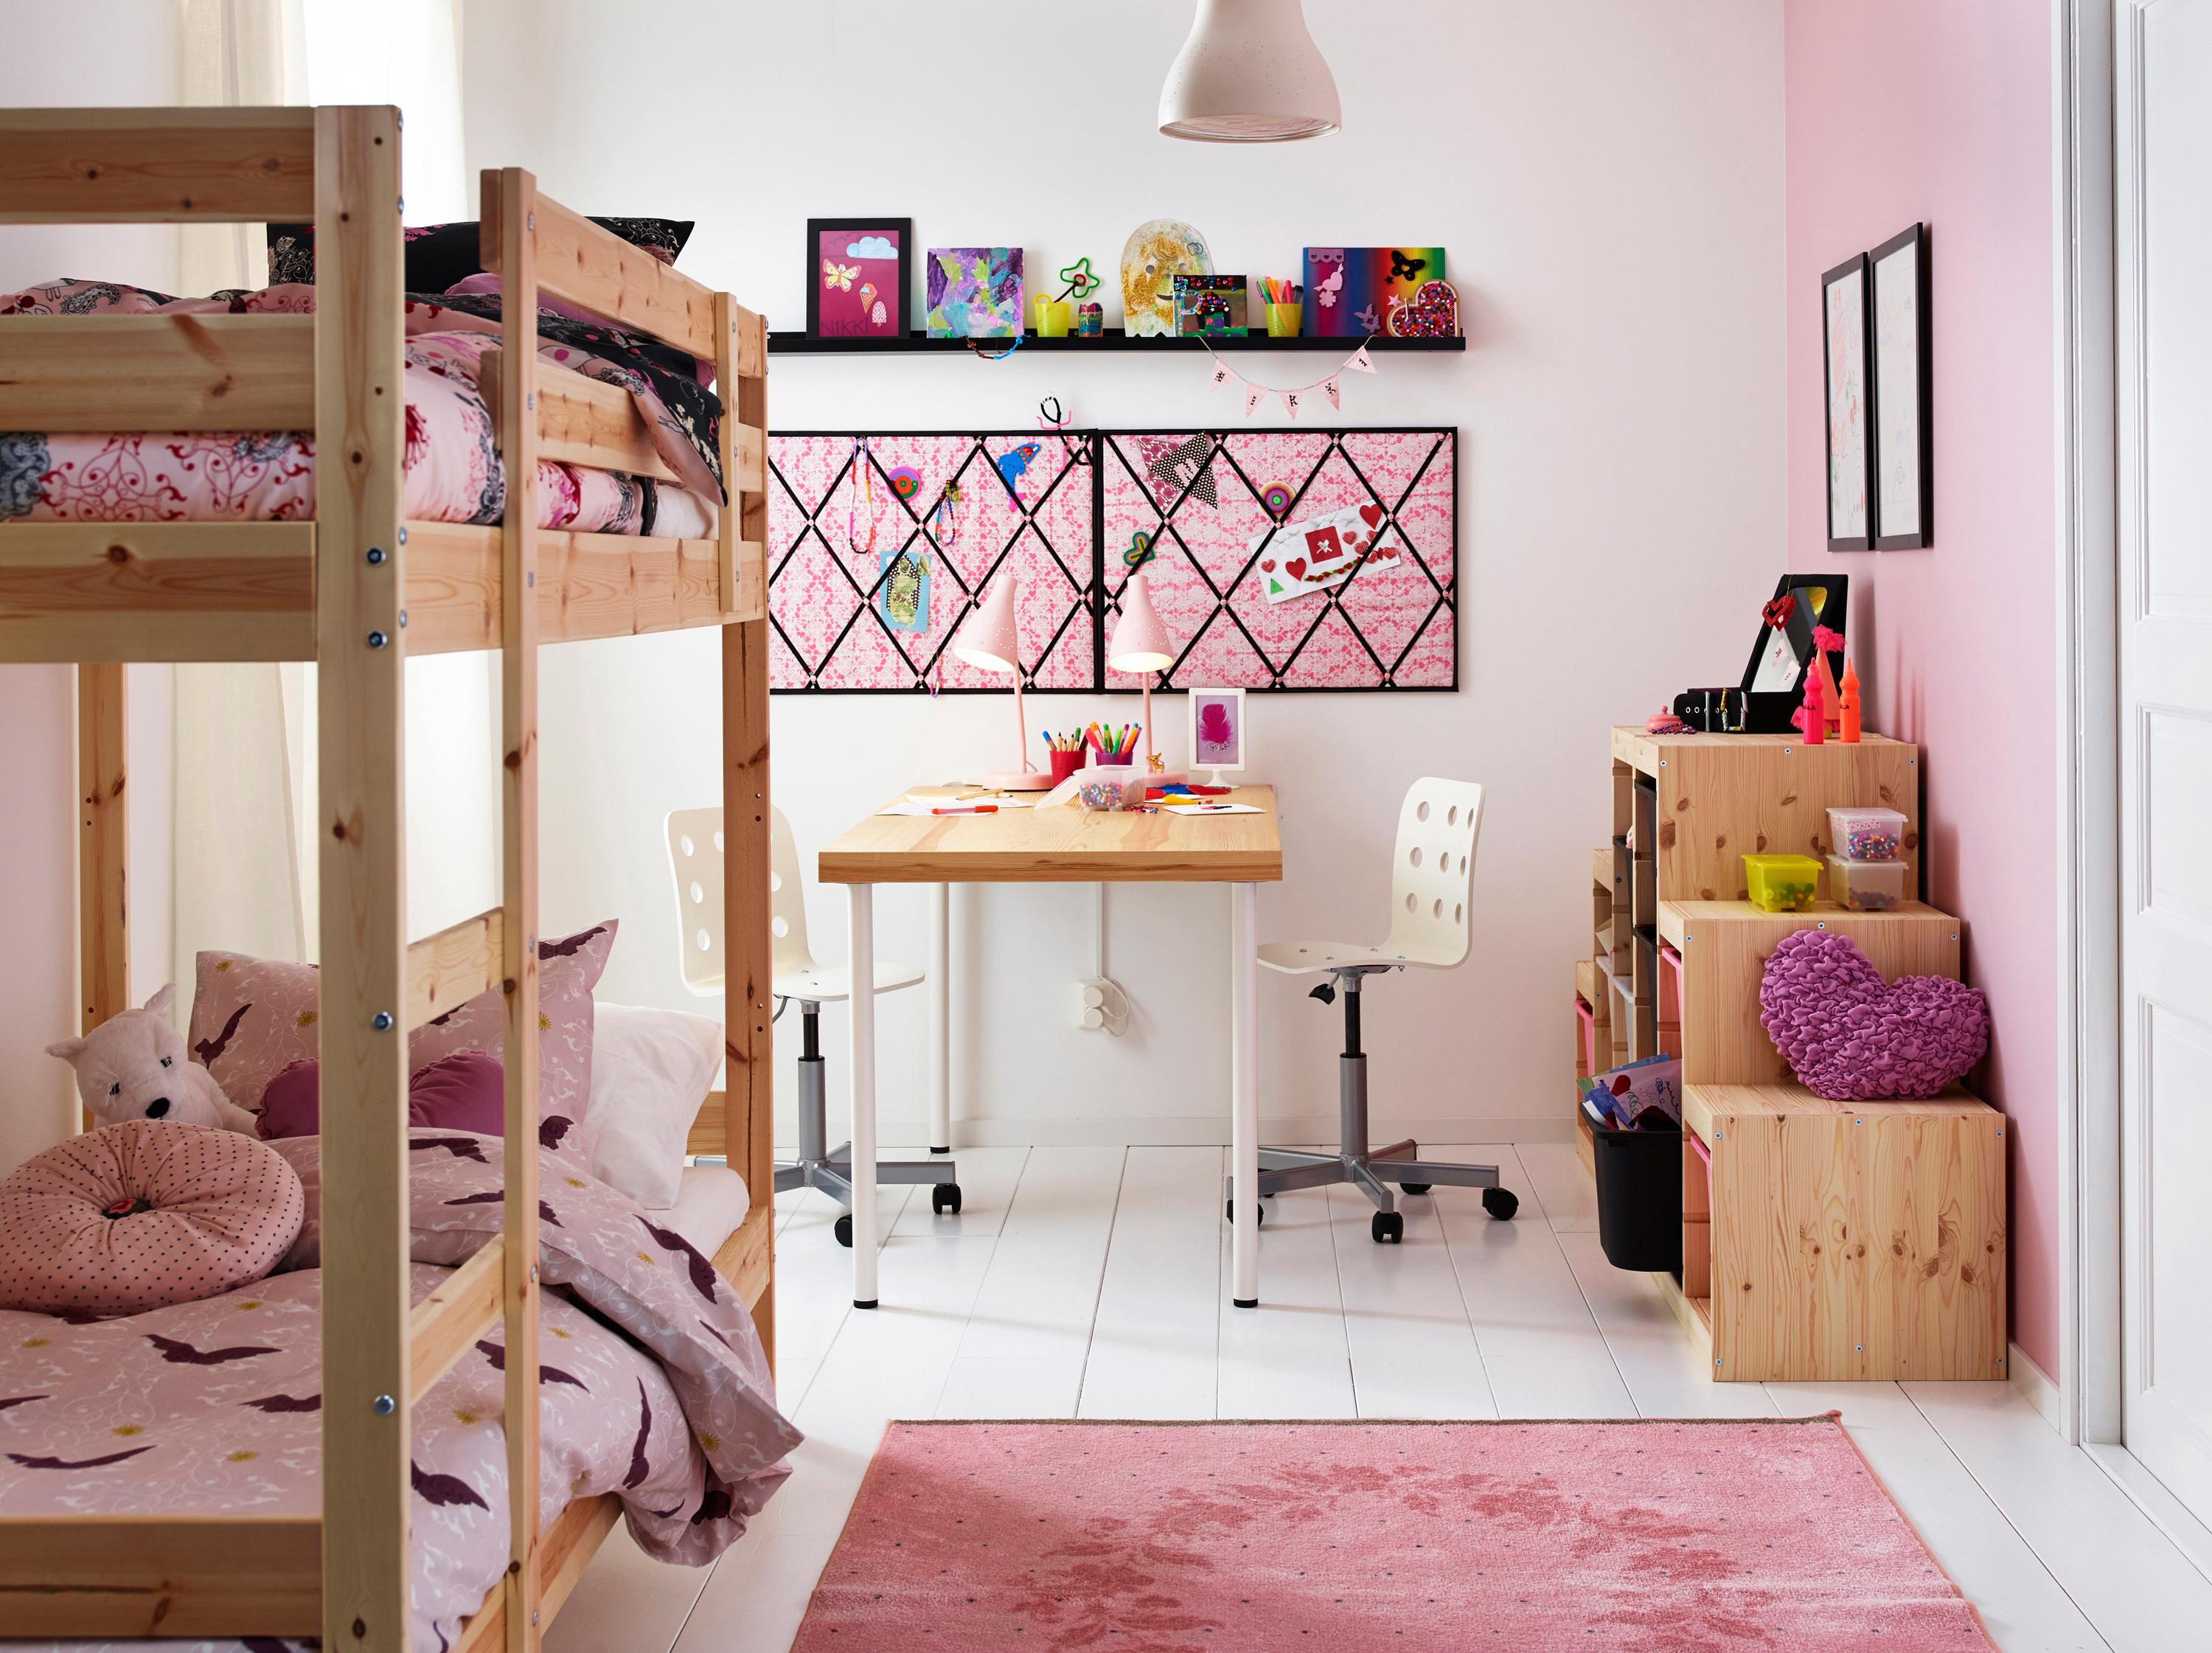 Etagenbett für Kinder im rosafarben Mädchenzimmer #bettwäsche #ikea #mädchenzimmer #etagenbett #weißefliesen #rosawandfarbe ©Inter Ikea Systems B.V.